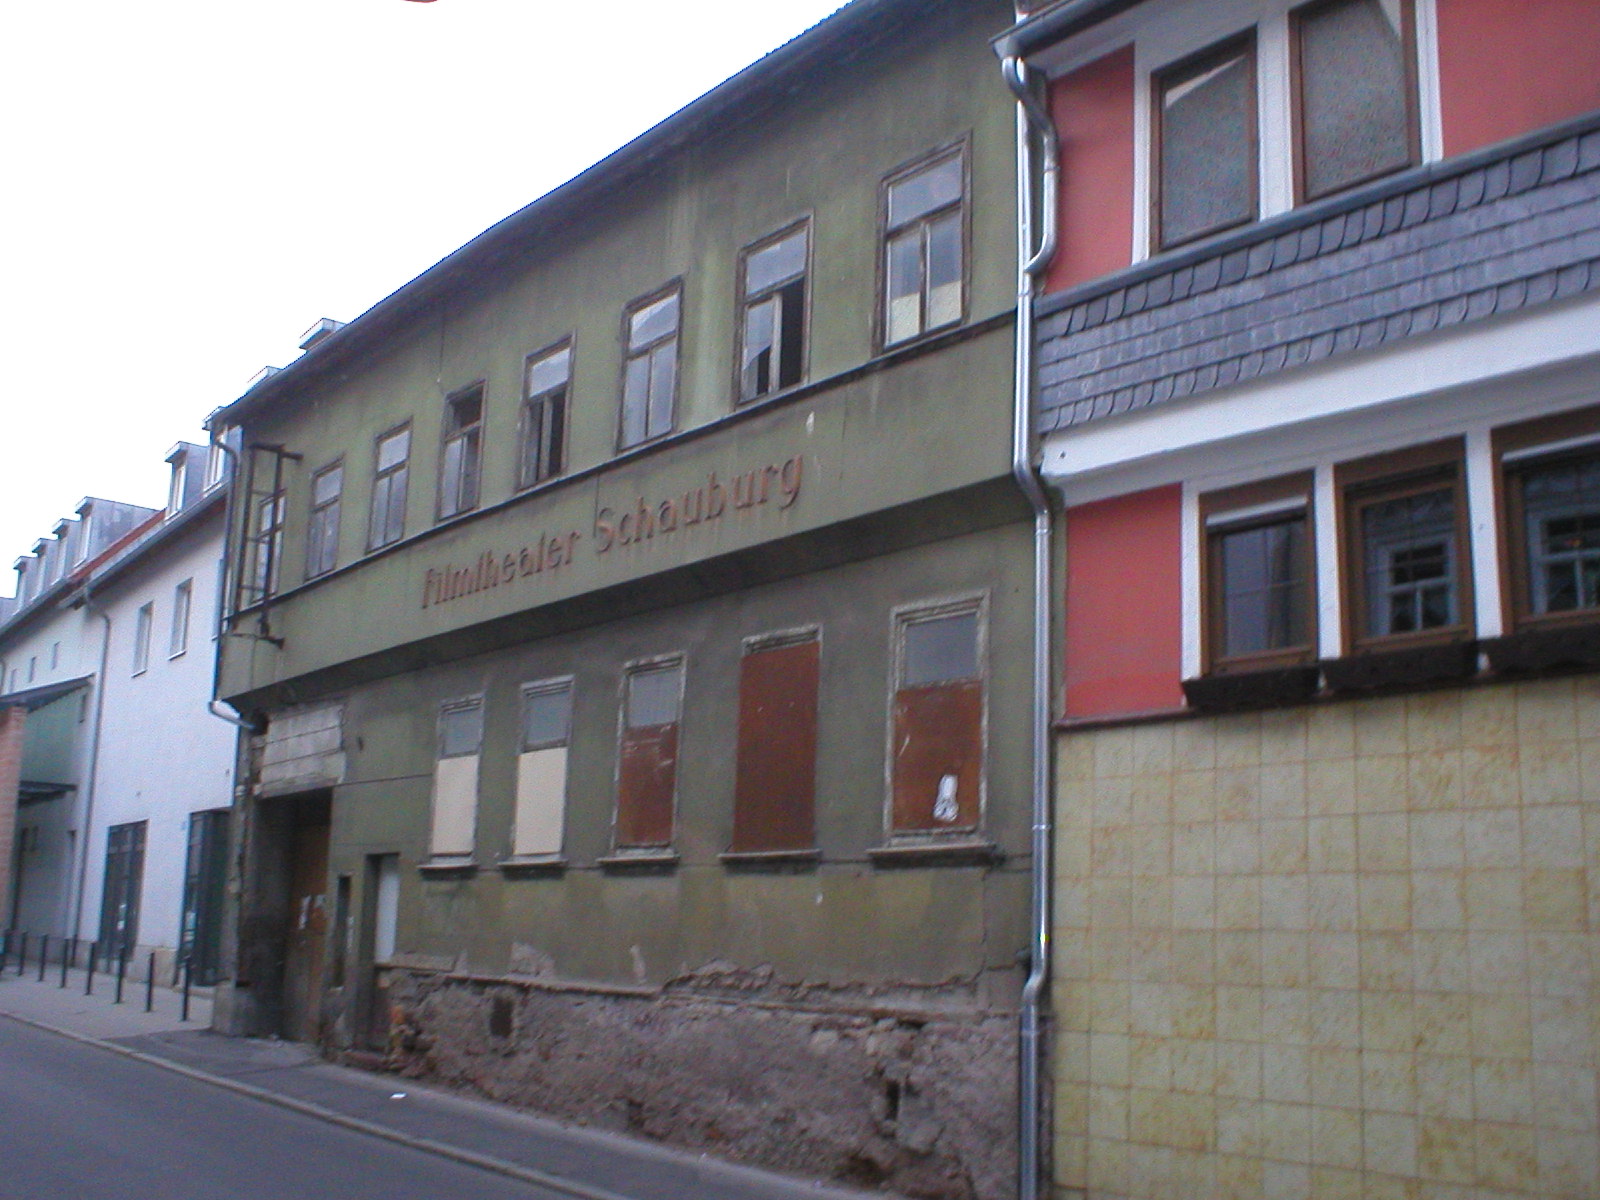 Kino Eisenach